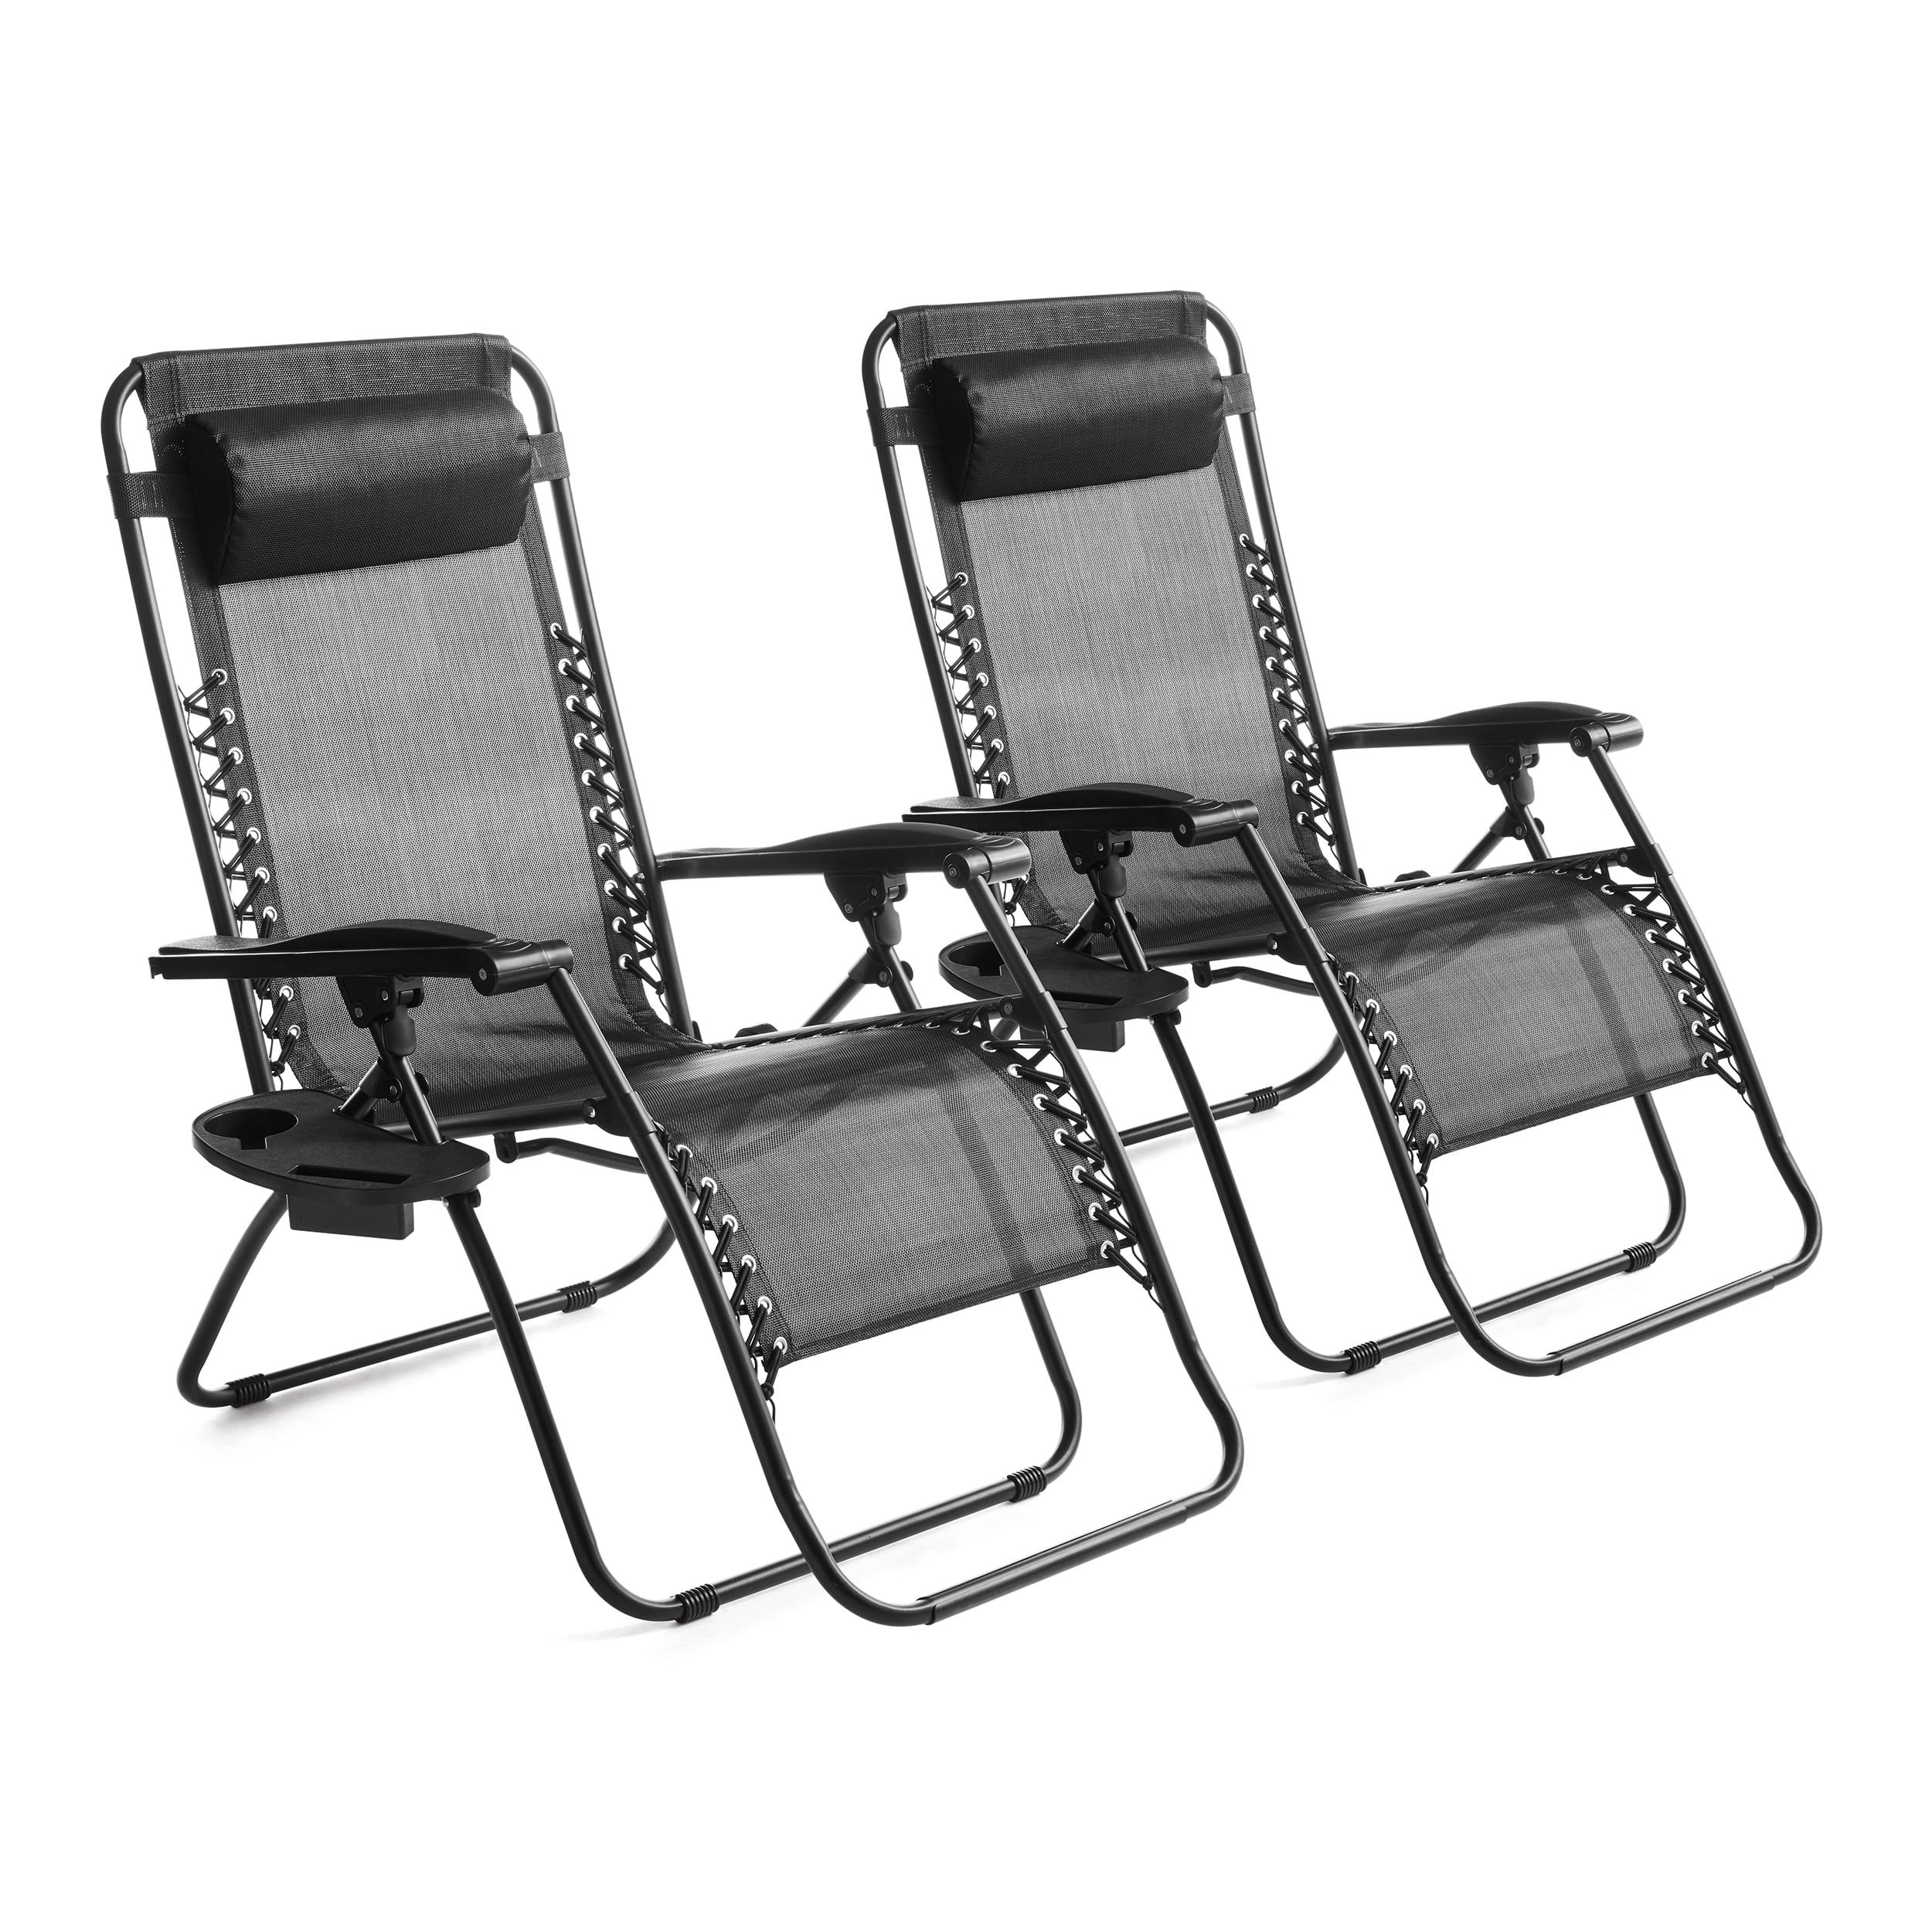 Mainstays Zero Gravity Chair Lounger, 2 Pack - Black | Walmart (US)